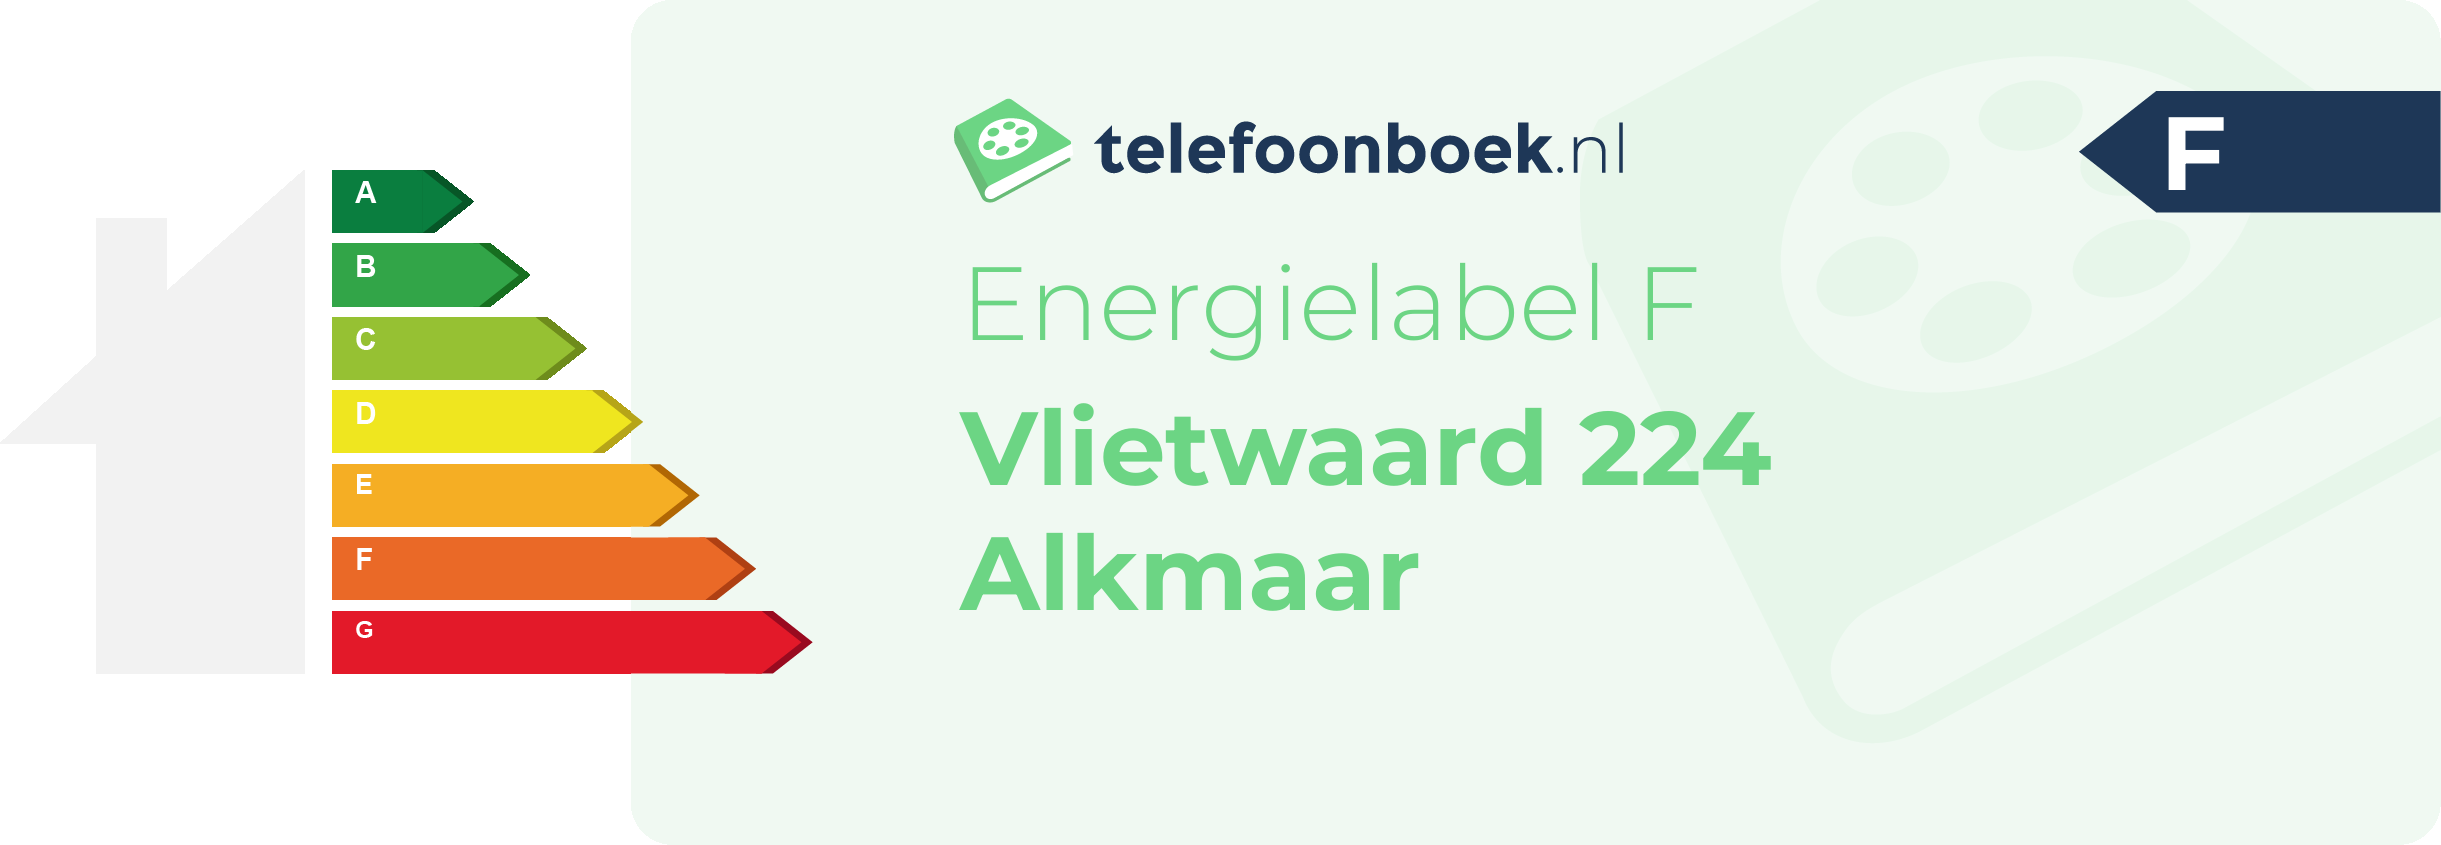 Energielabel Vlietwaard 224 Alkmaar